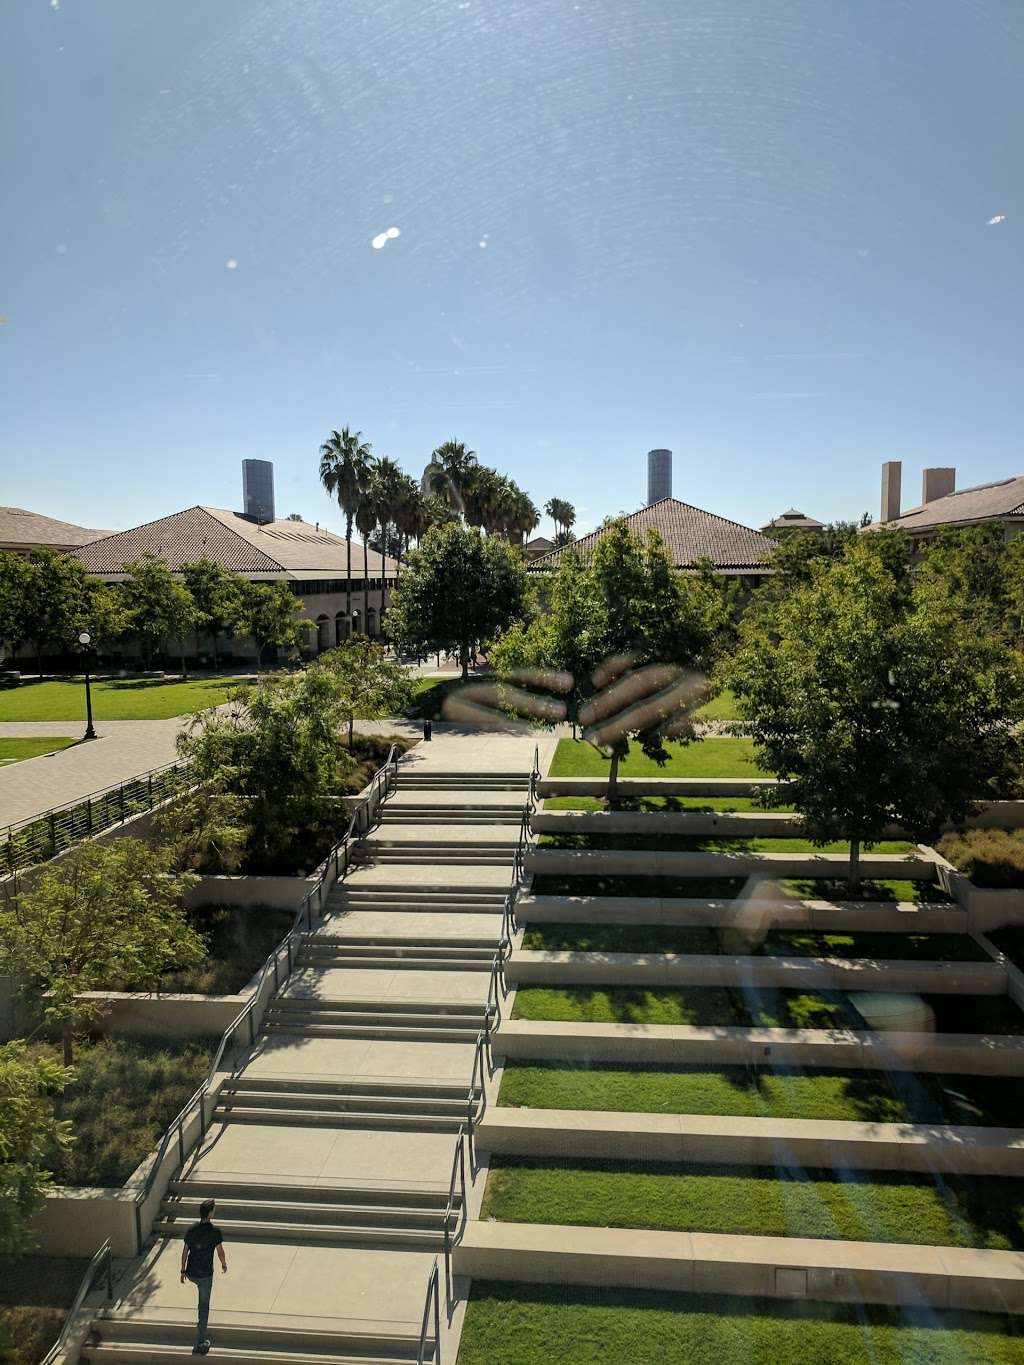 Terman Engineering Library | 475 Via Ortega Room 201, Stanford, CA 94305, USA | Phone: (650) 723-0001